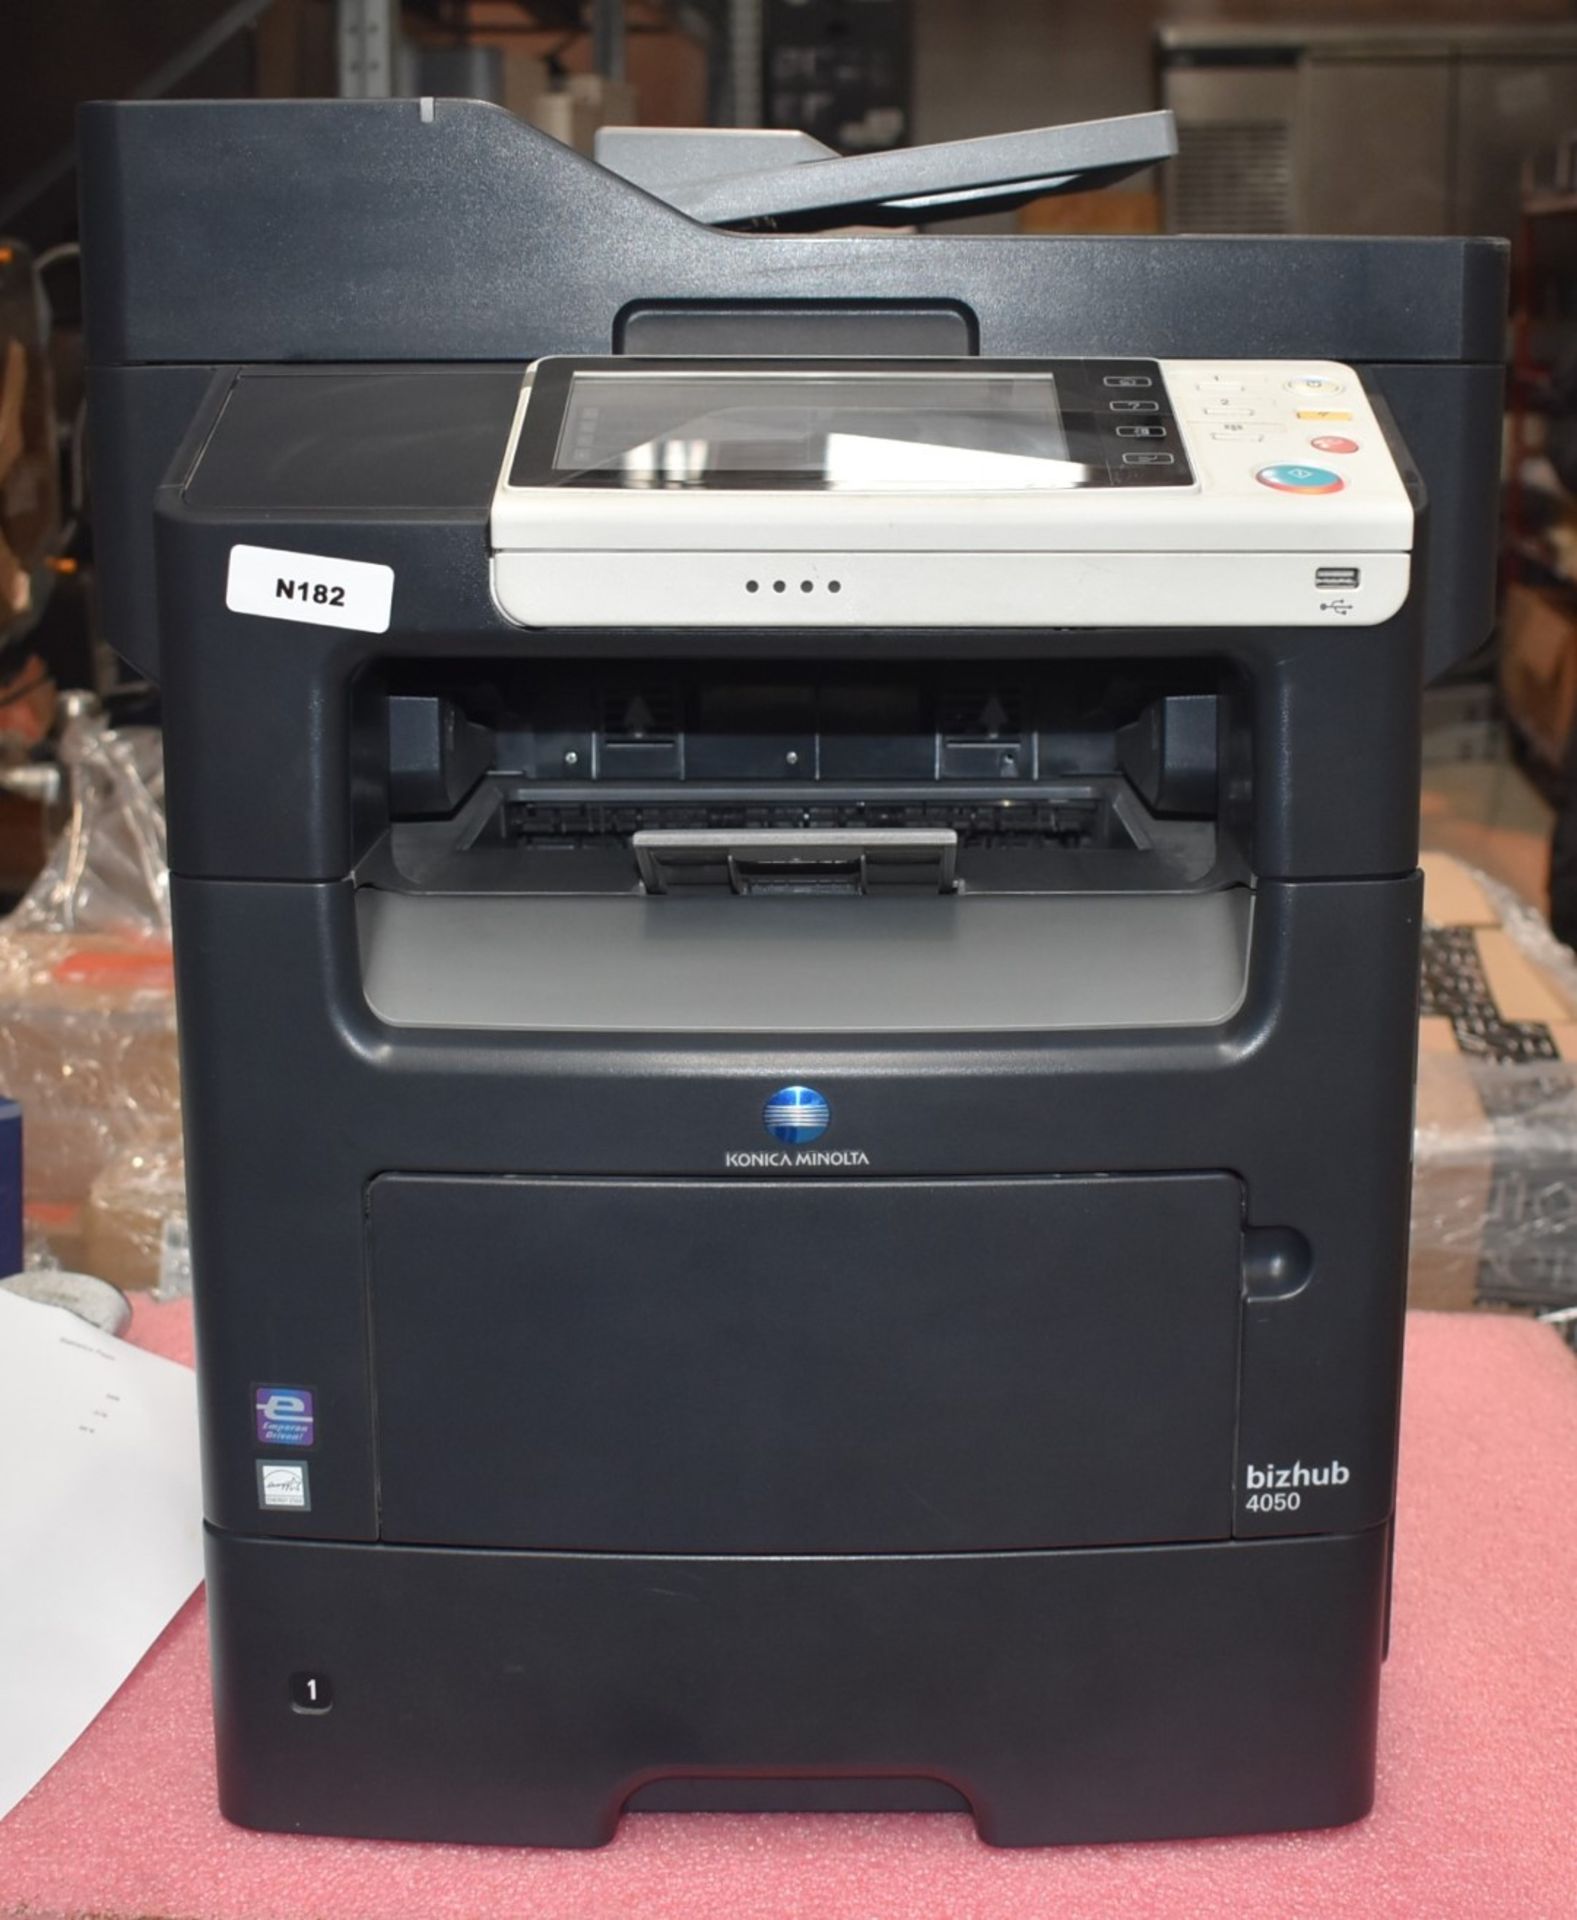 1 x Konica Minolta Bizhub 4050 Multifunction Printer and Scanner - Image 4 of 8